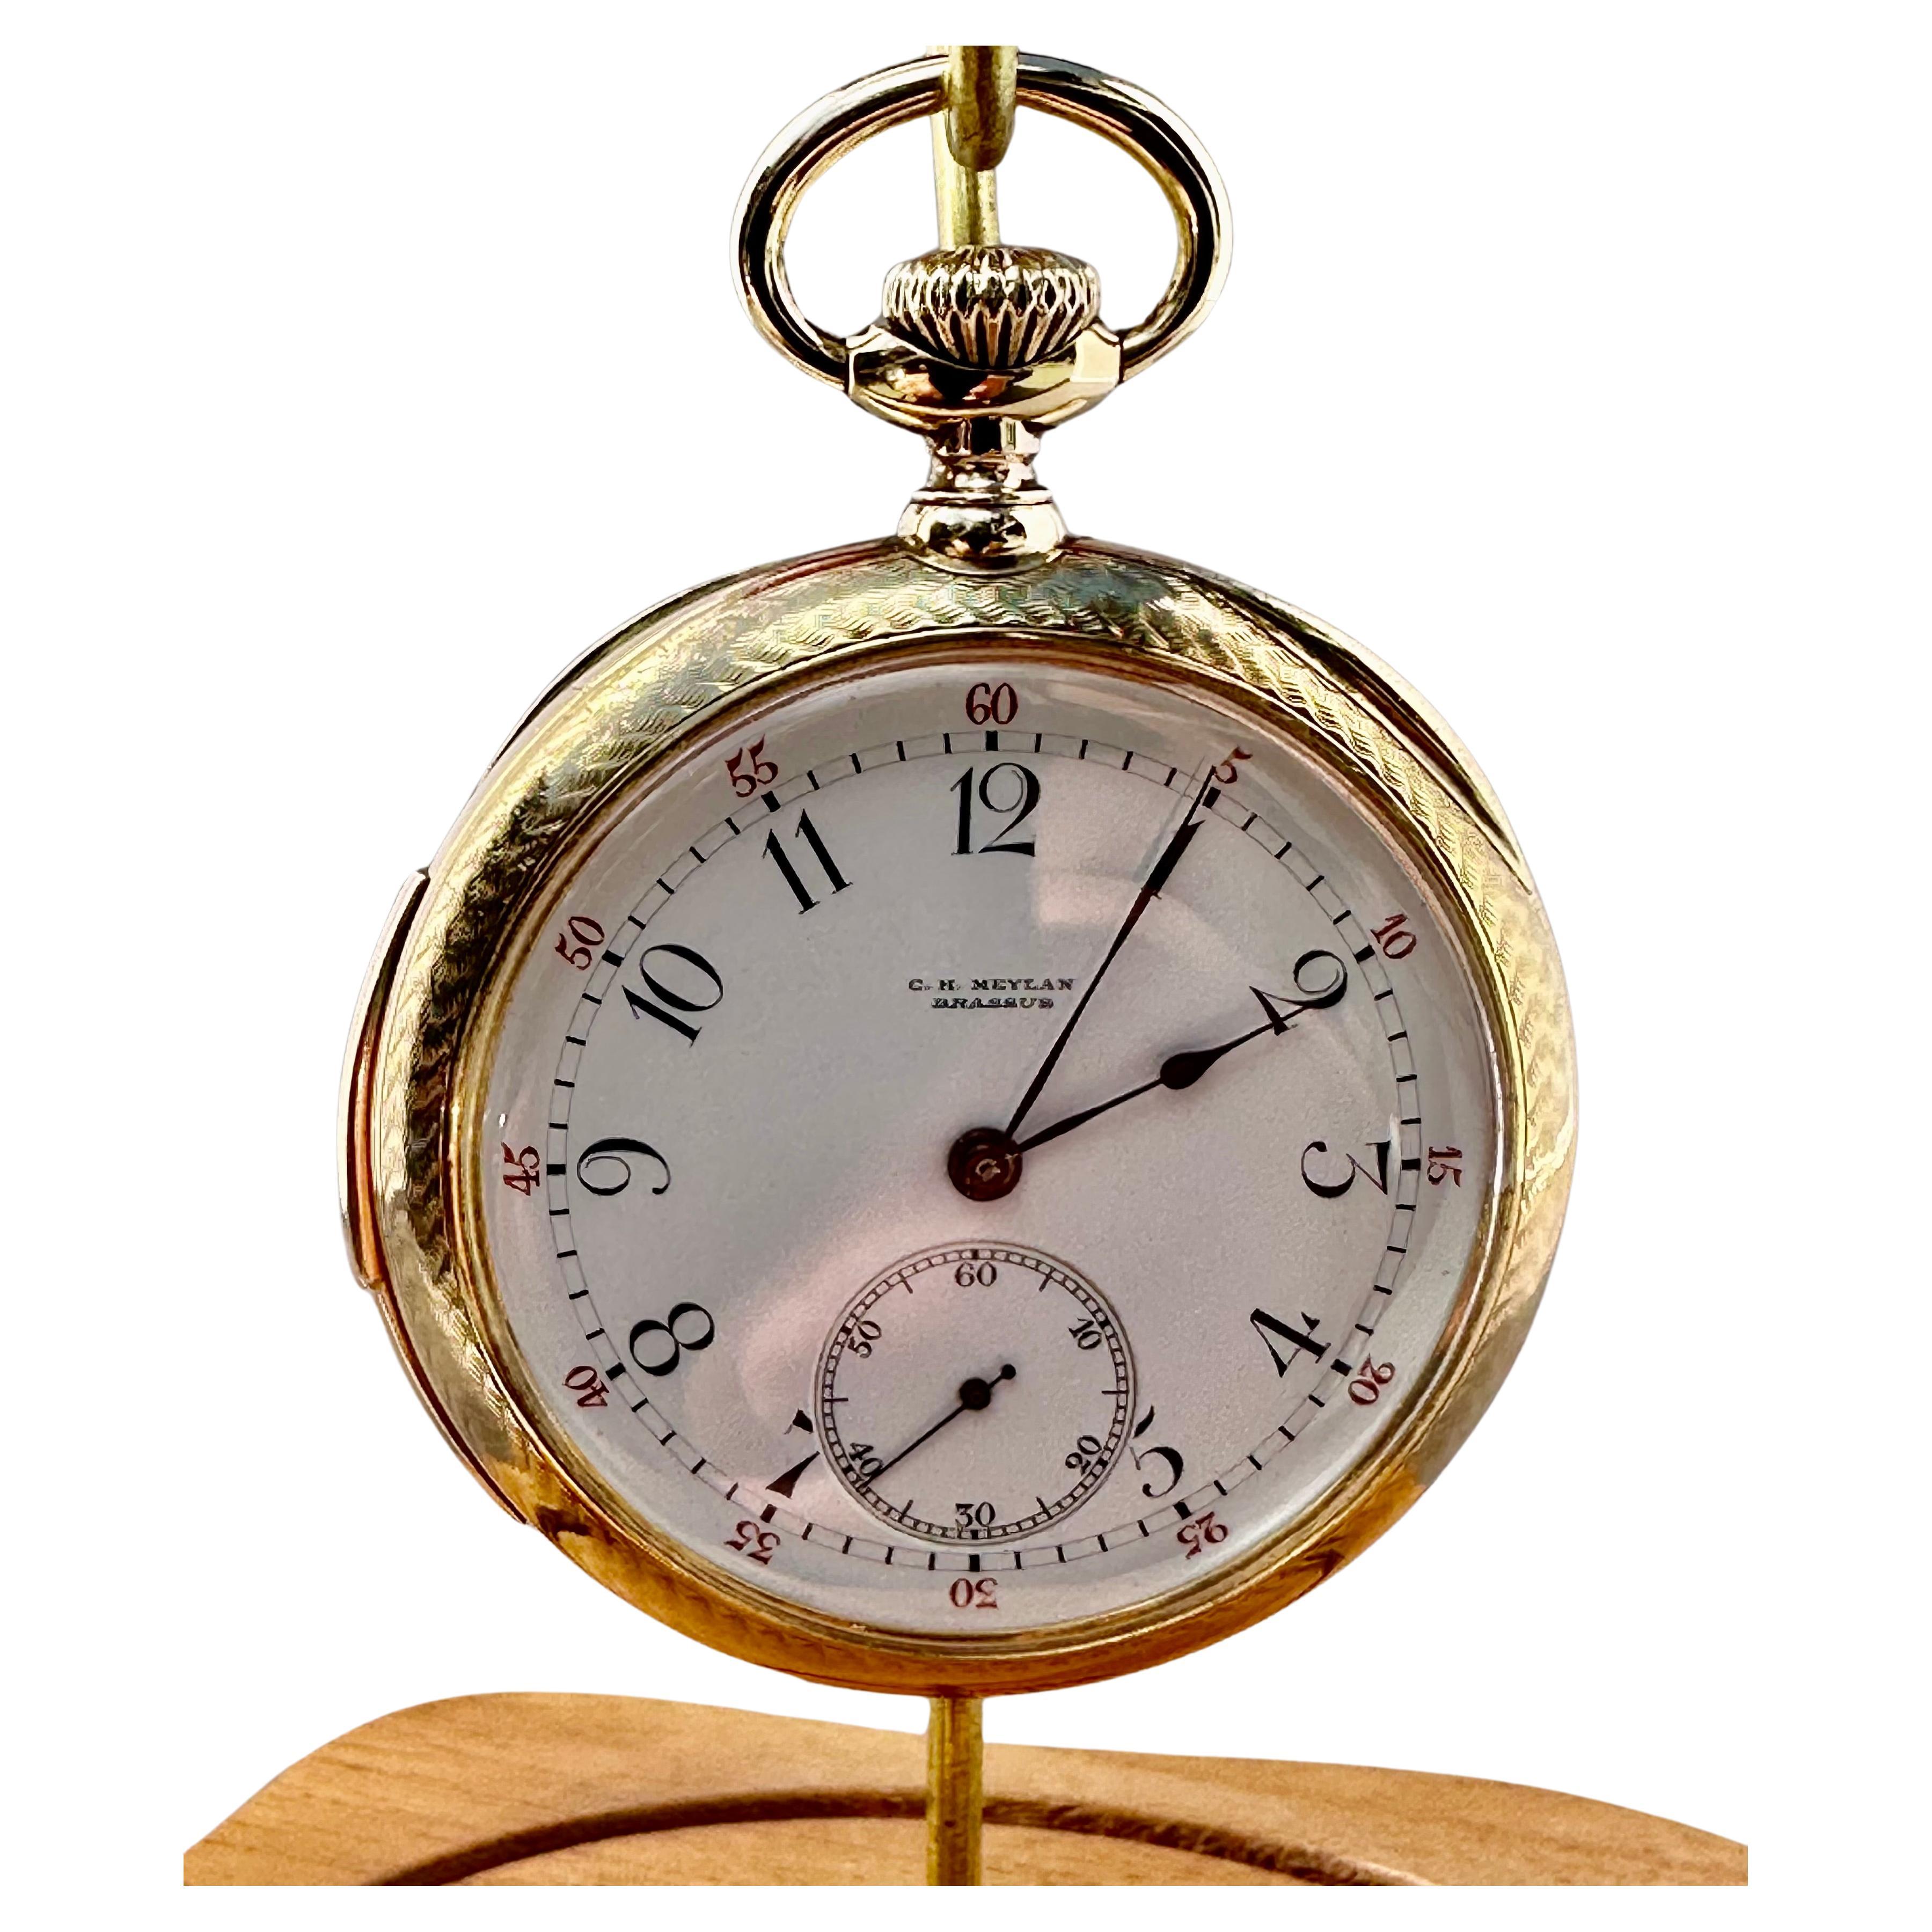 C.H. Meylan 18K Gold Keyless Lever Minute Repeater Pocket Watch Circa 1890's